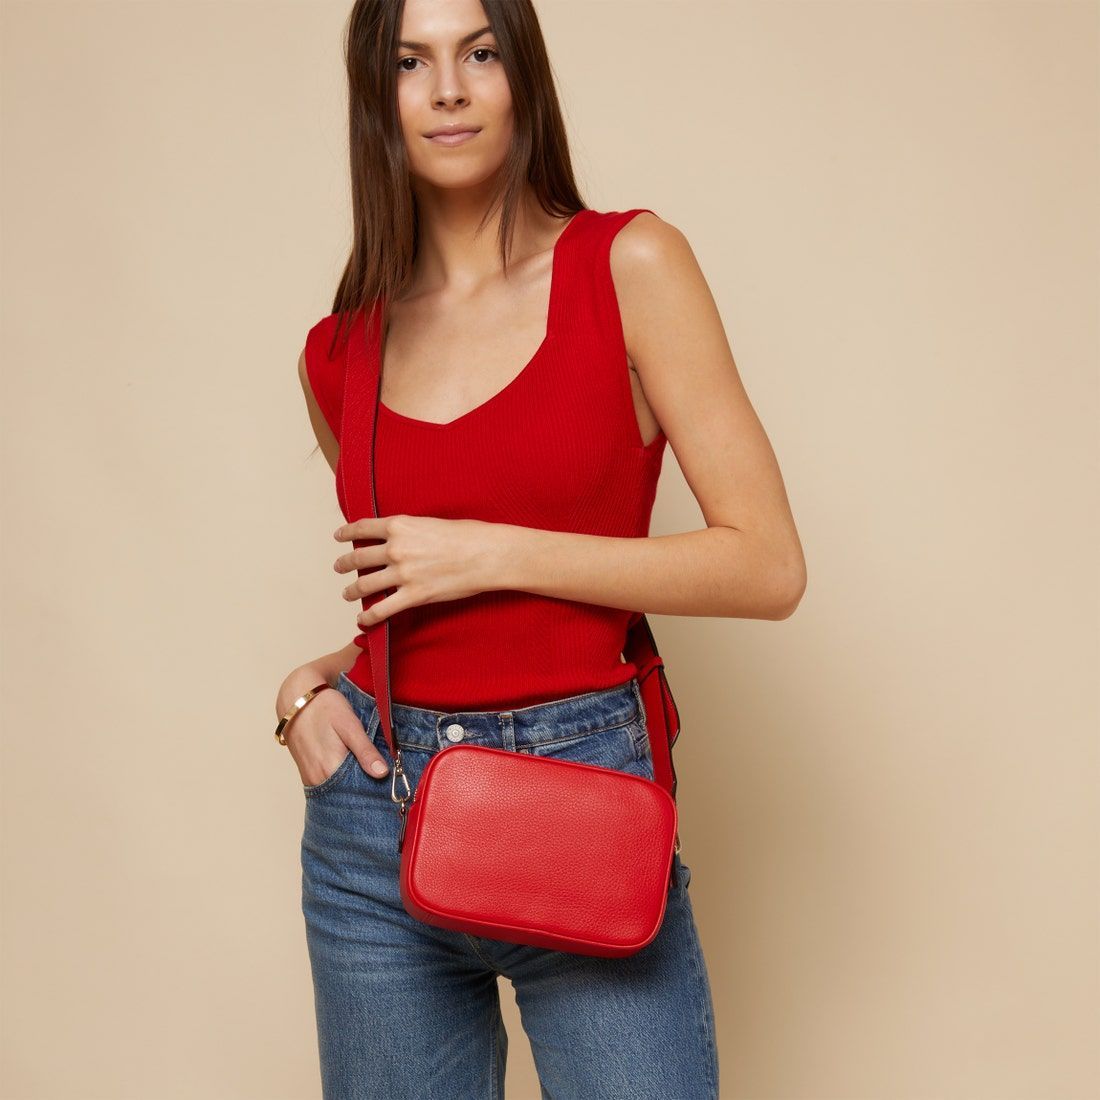 Lattice Mini Bag - Chic And Compact Fashion Essential